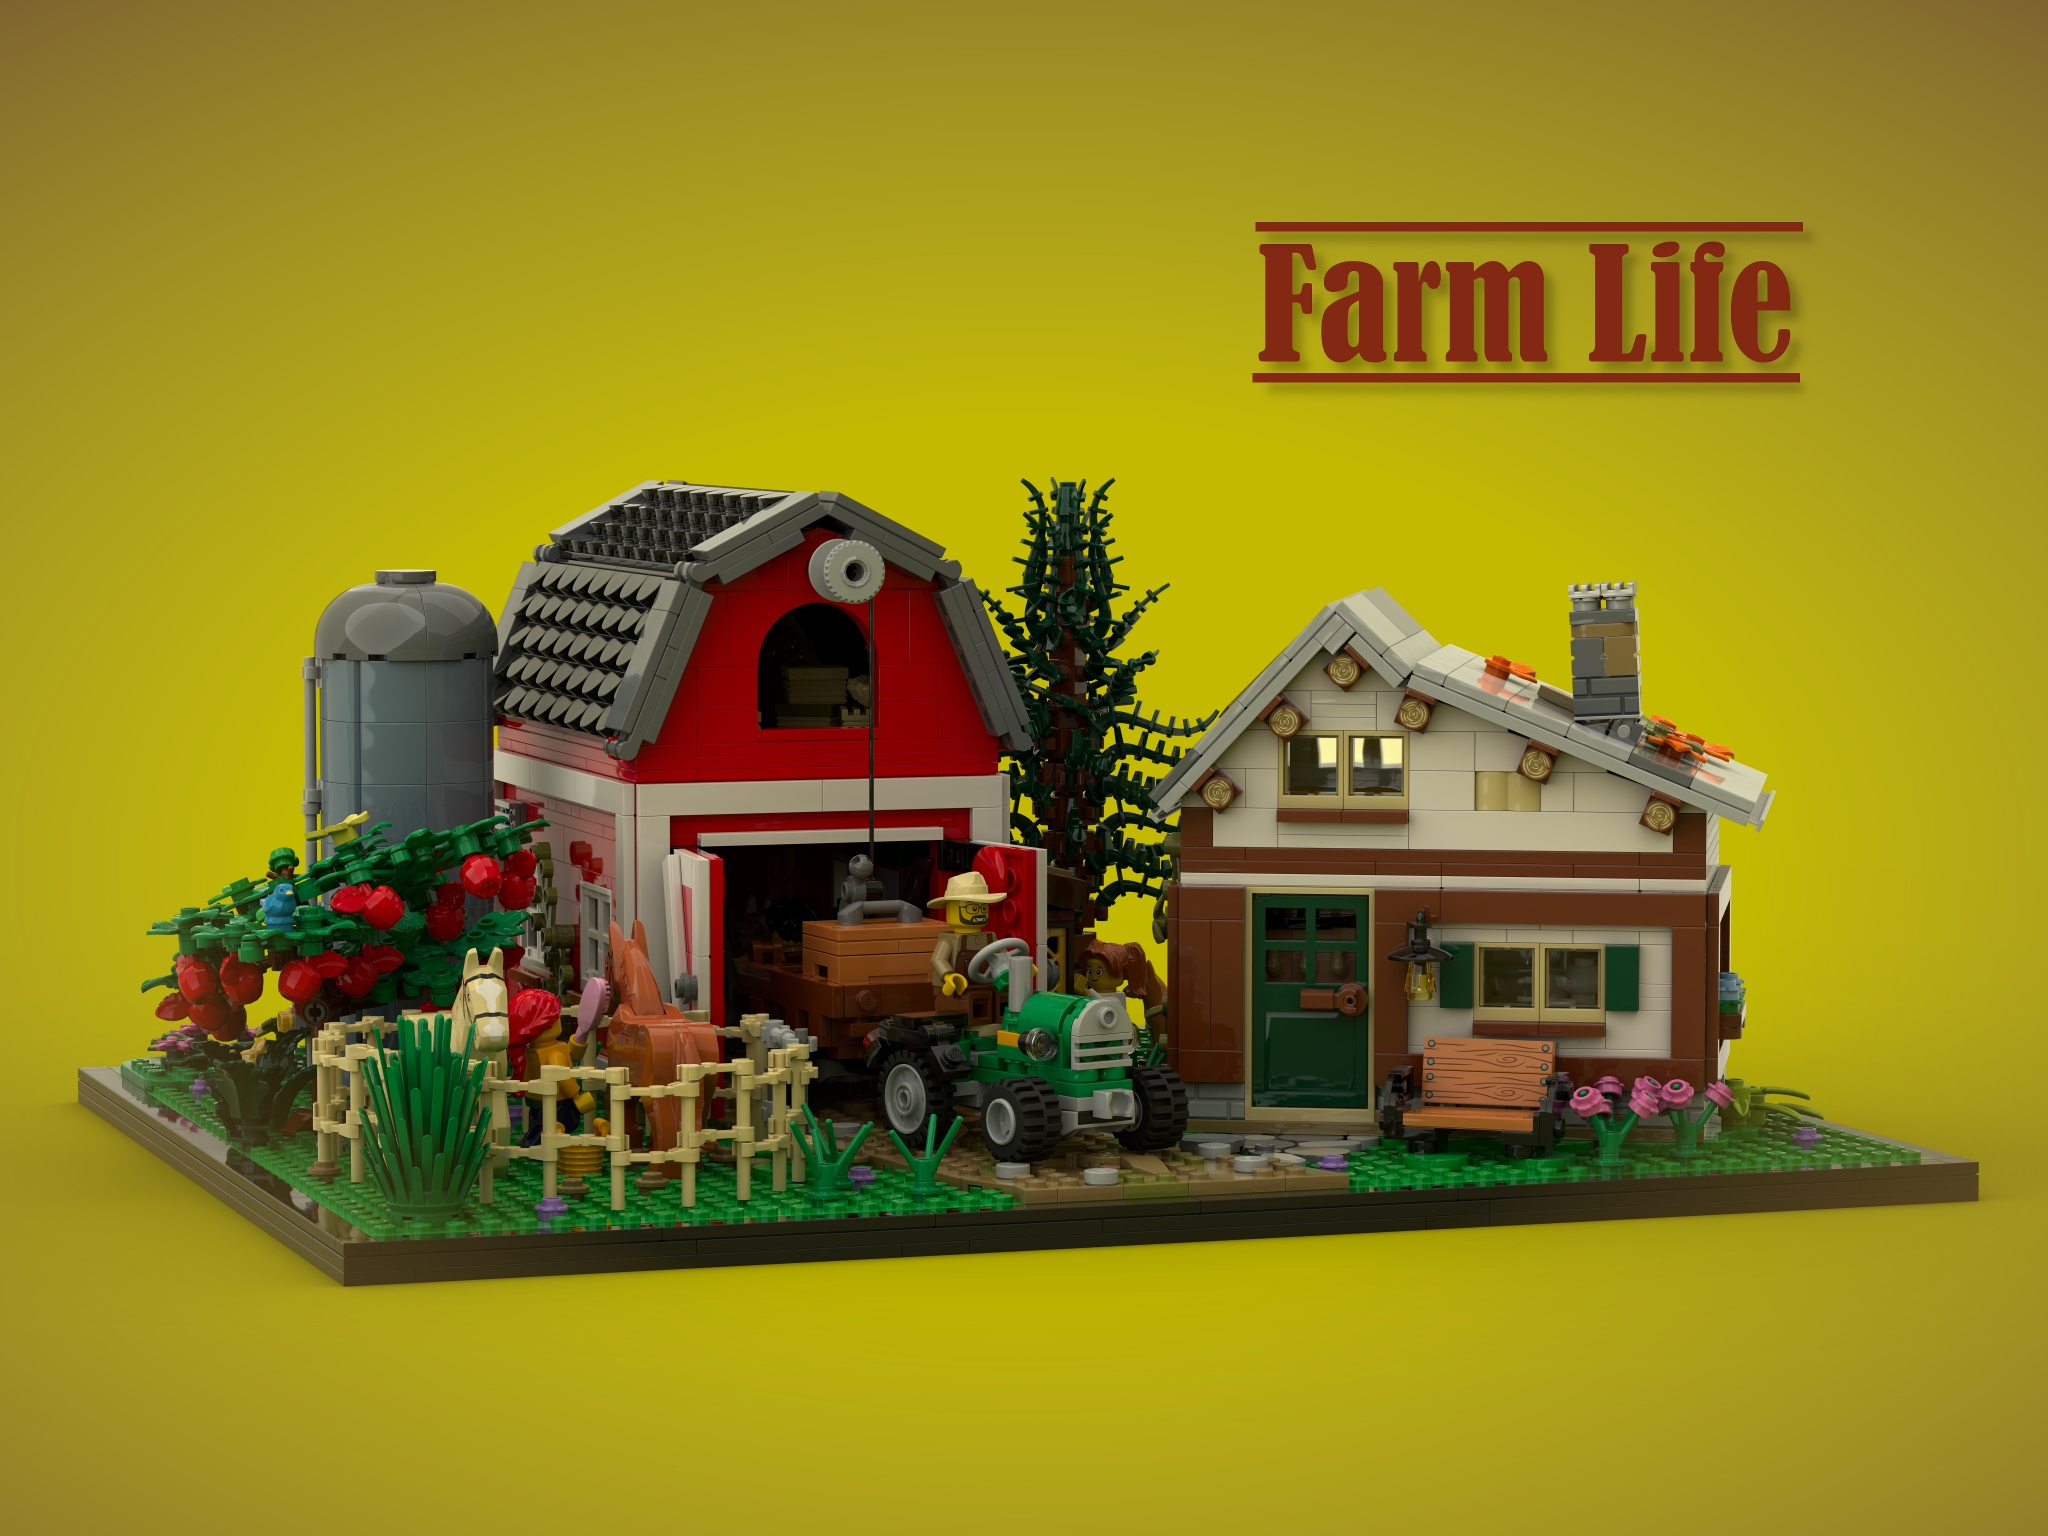 LEGO Bricklink Designer Program Farm Life